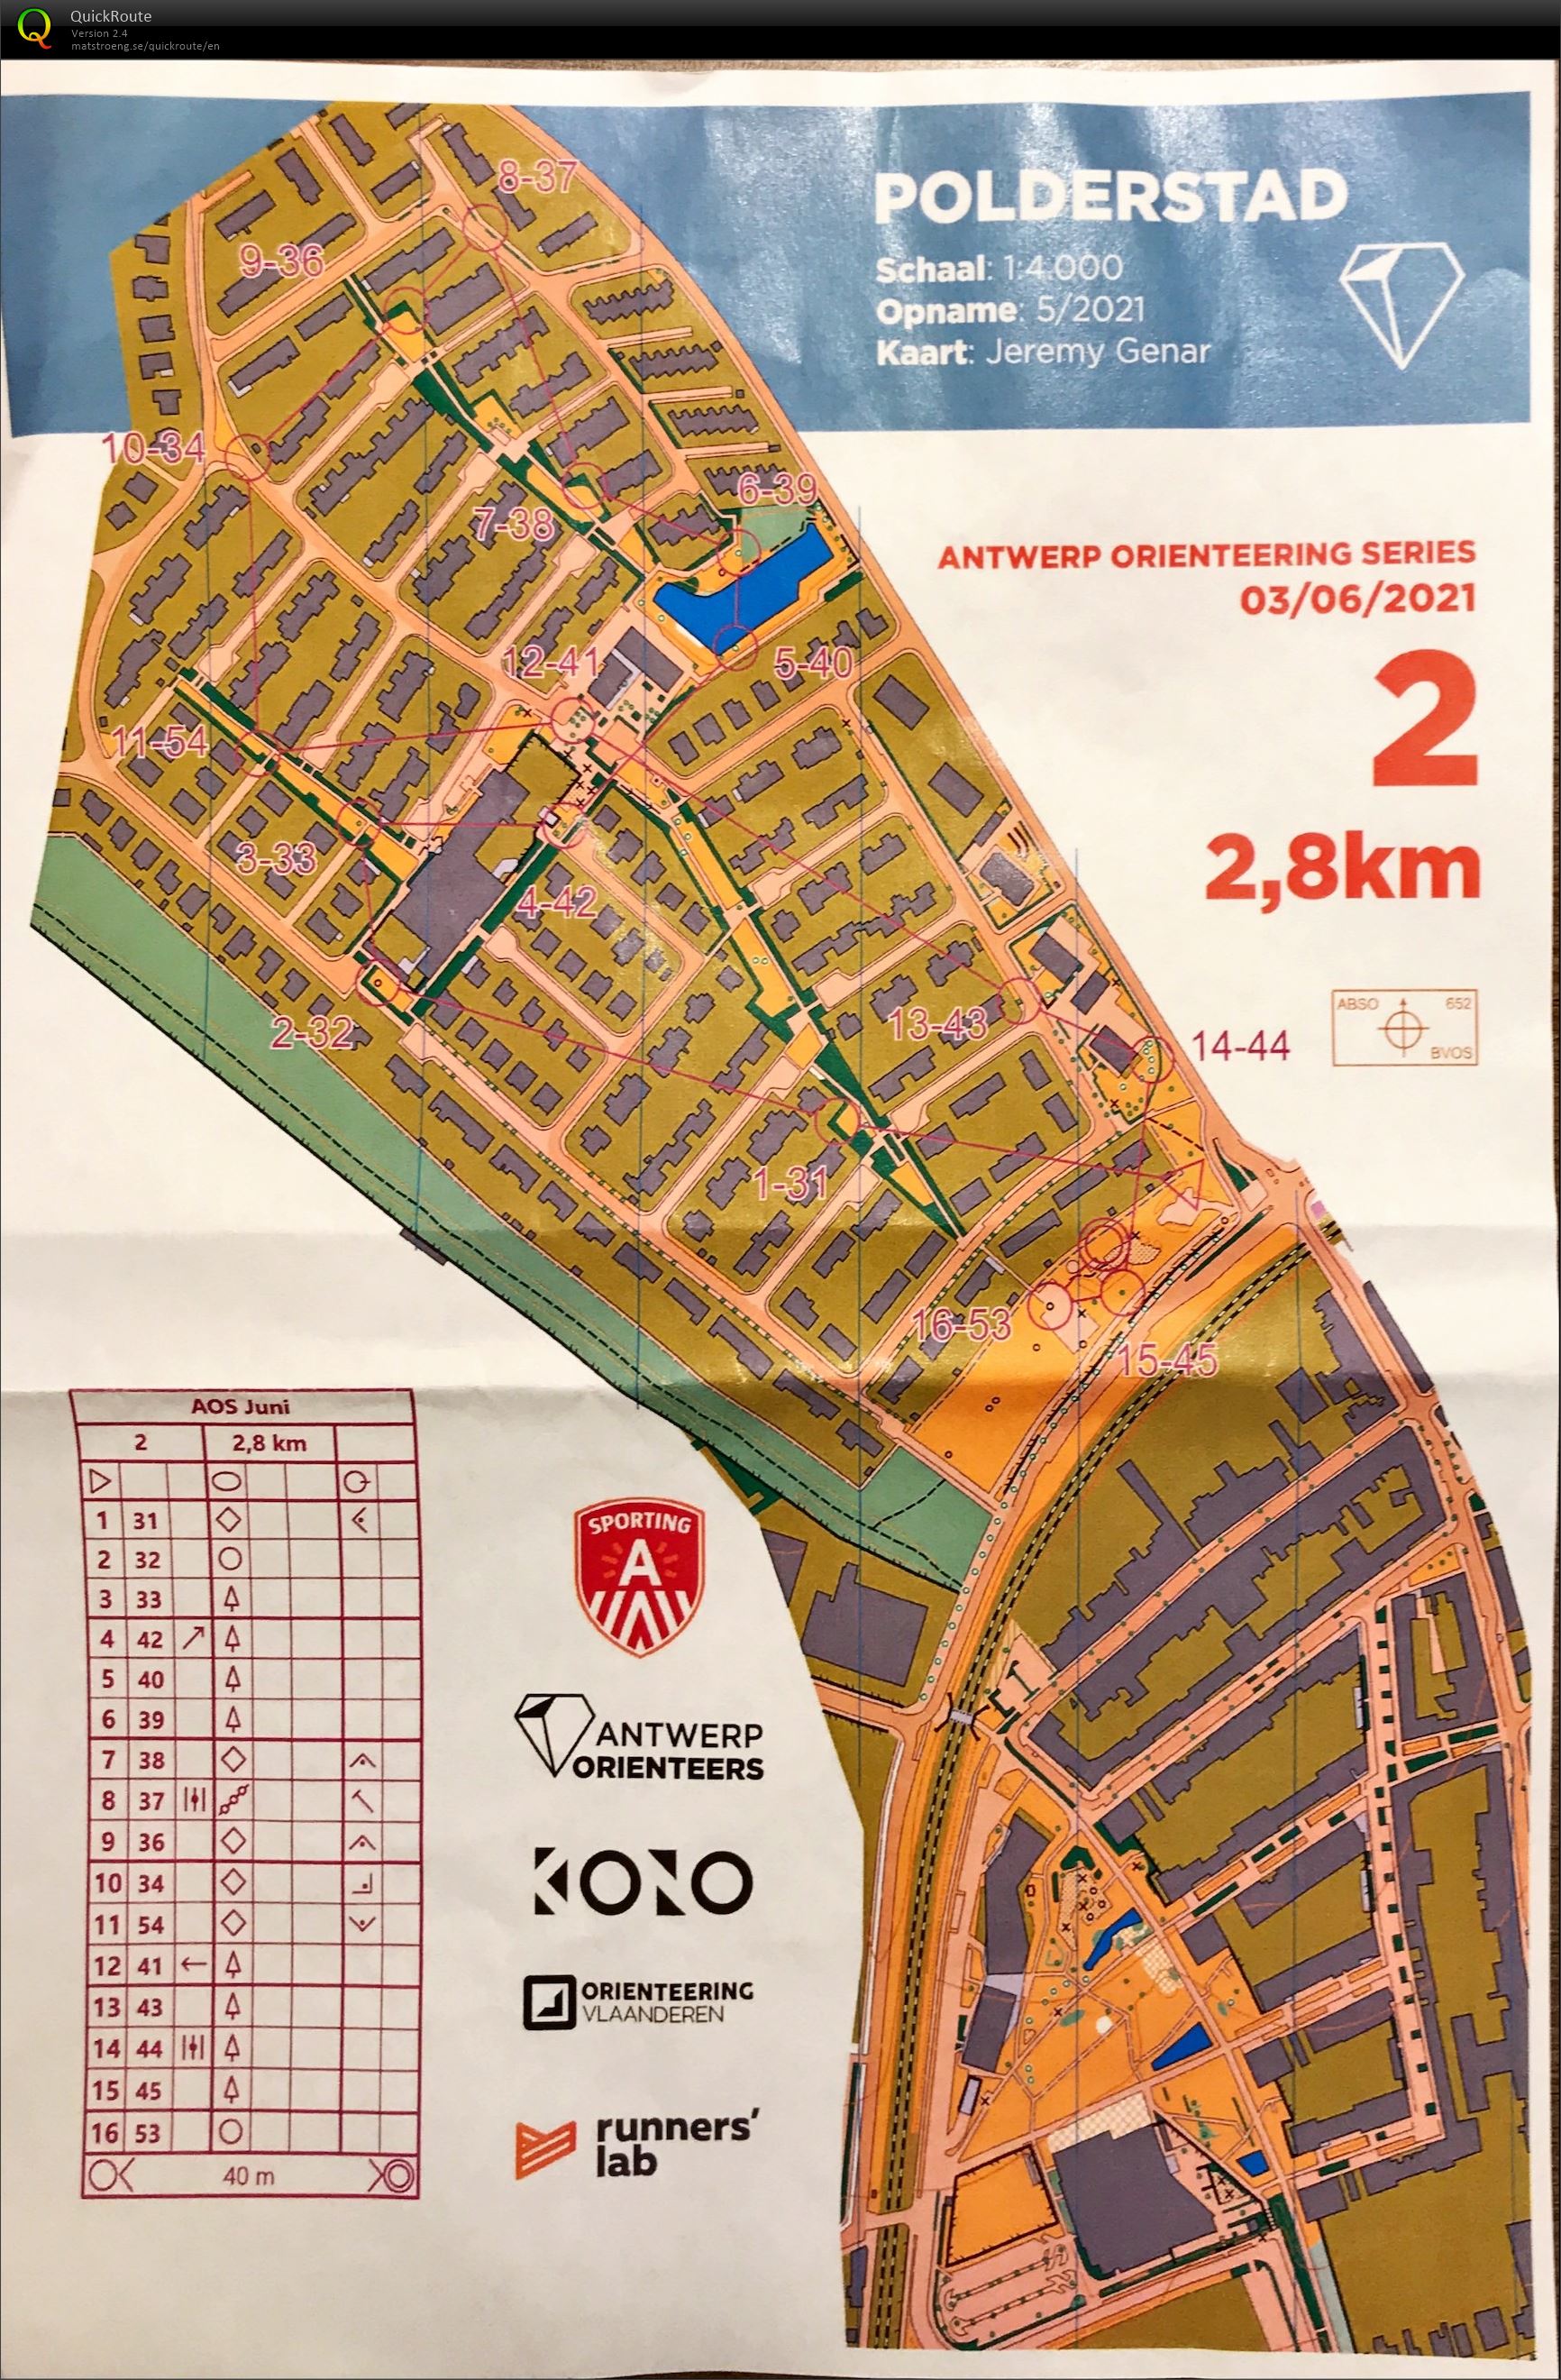 Antwerp Orienteering Series - Polderstad - 2.8K (03.06.2021)